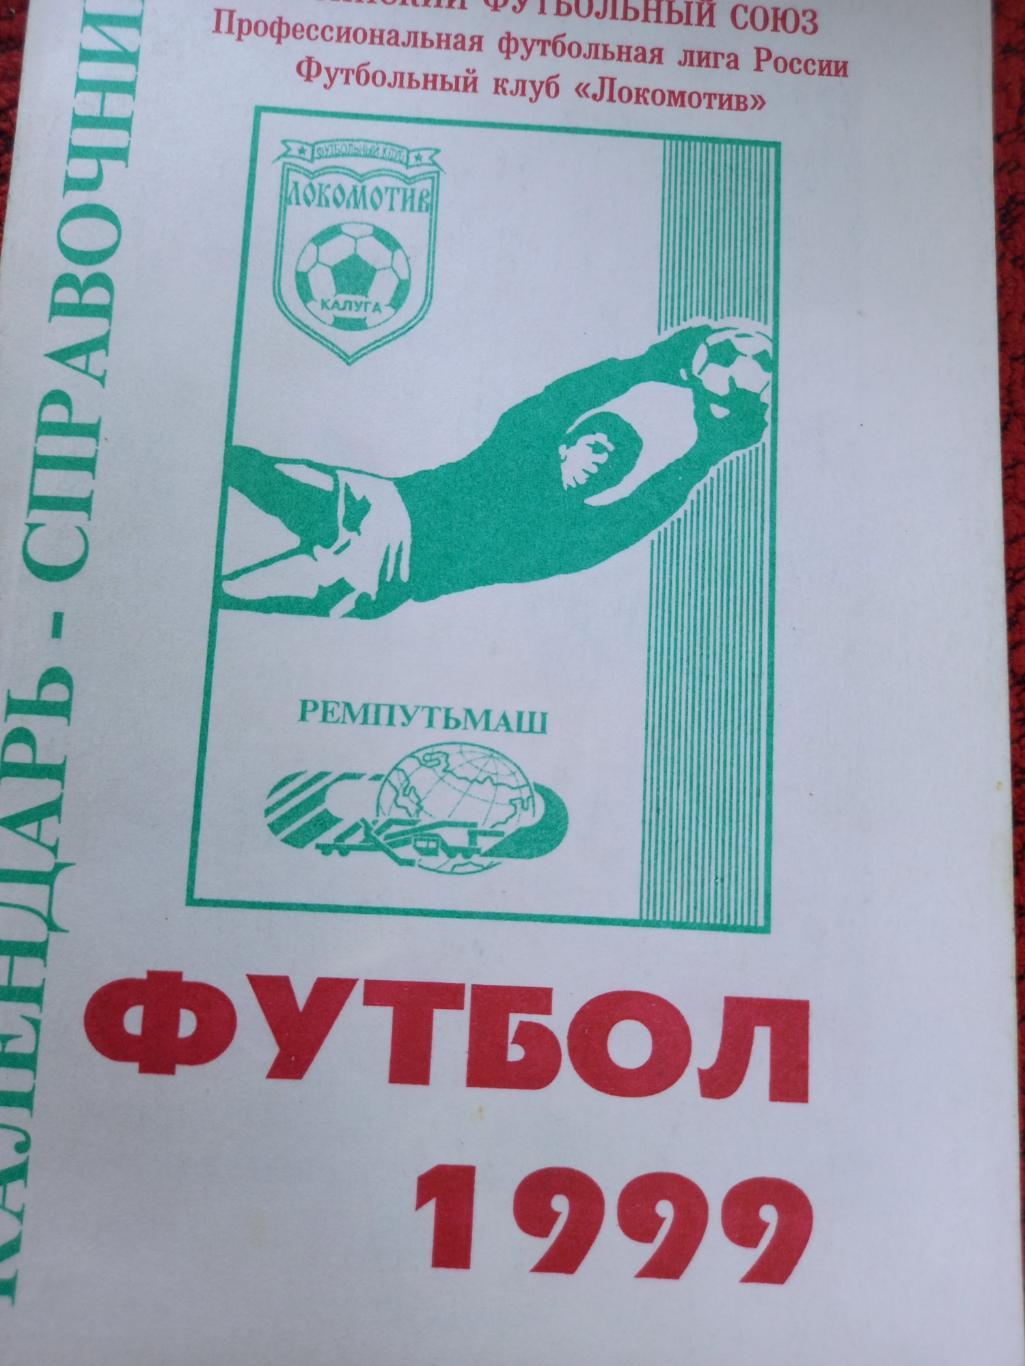 Календарь - справочник Калуга 1999г.